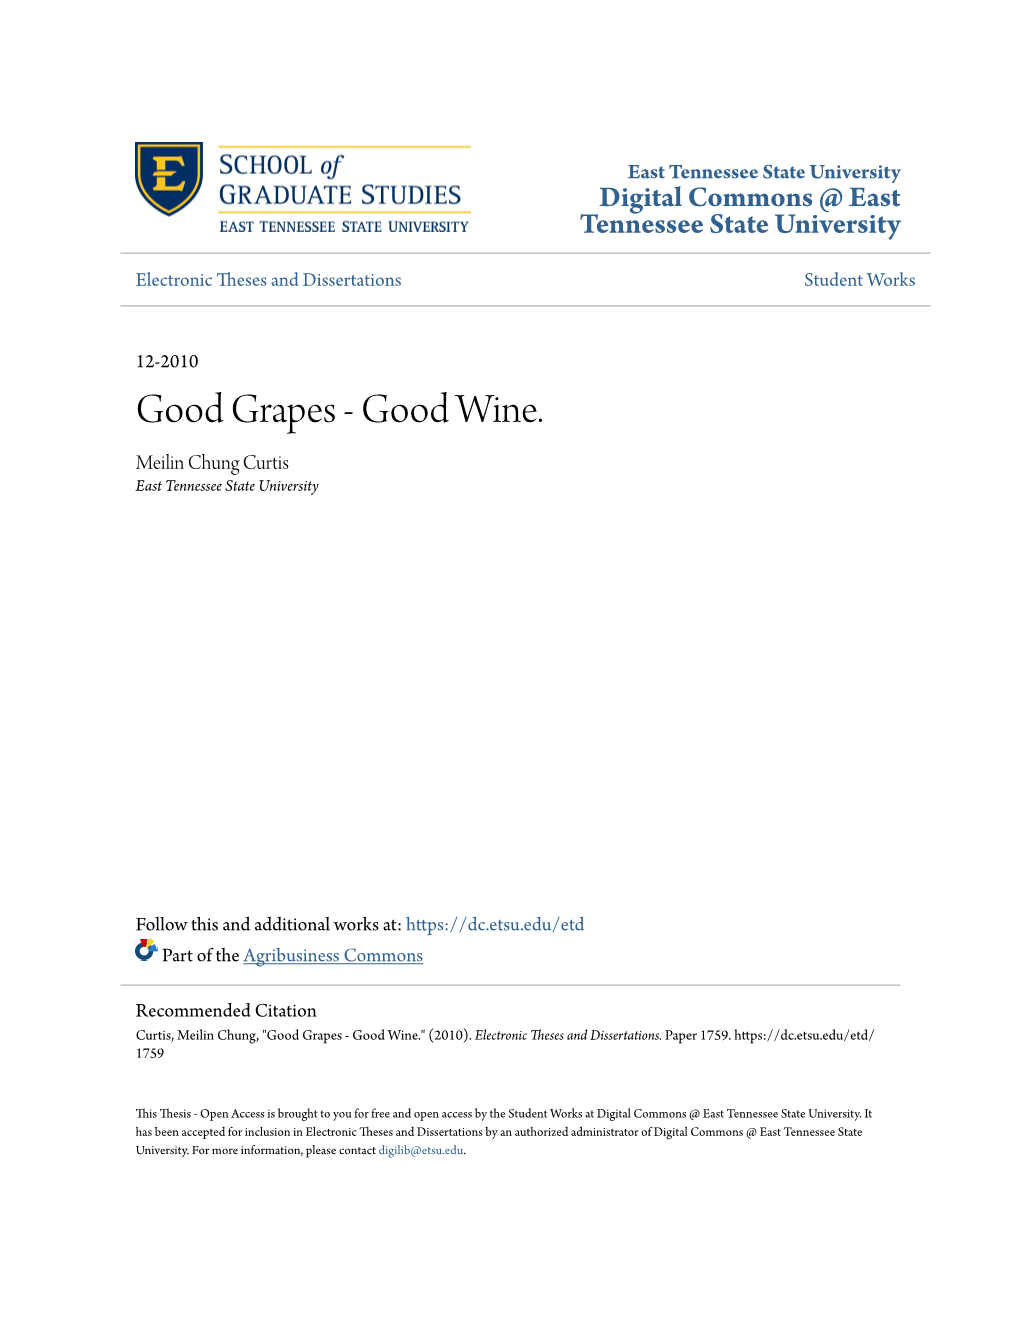 Good Grapes - Good Wine